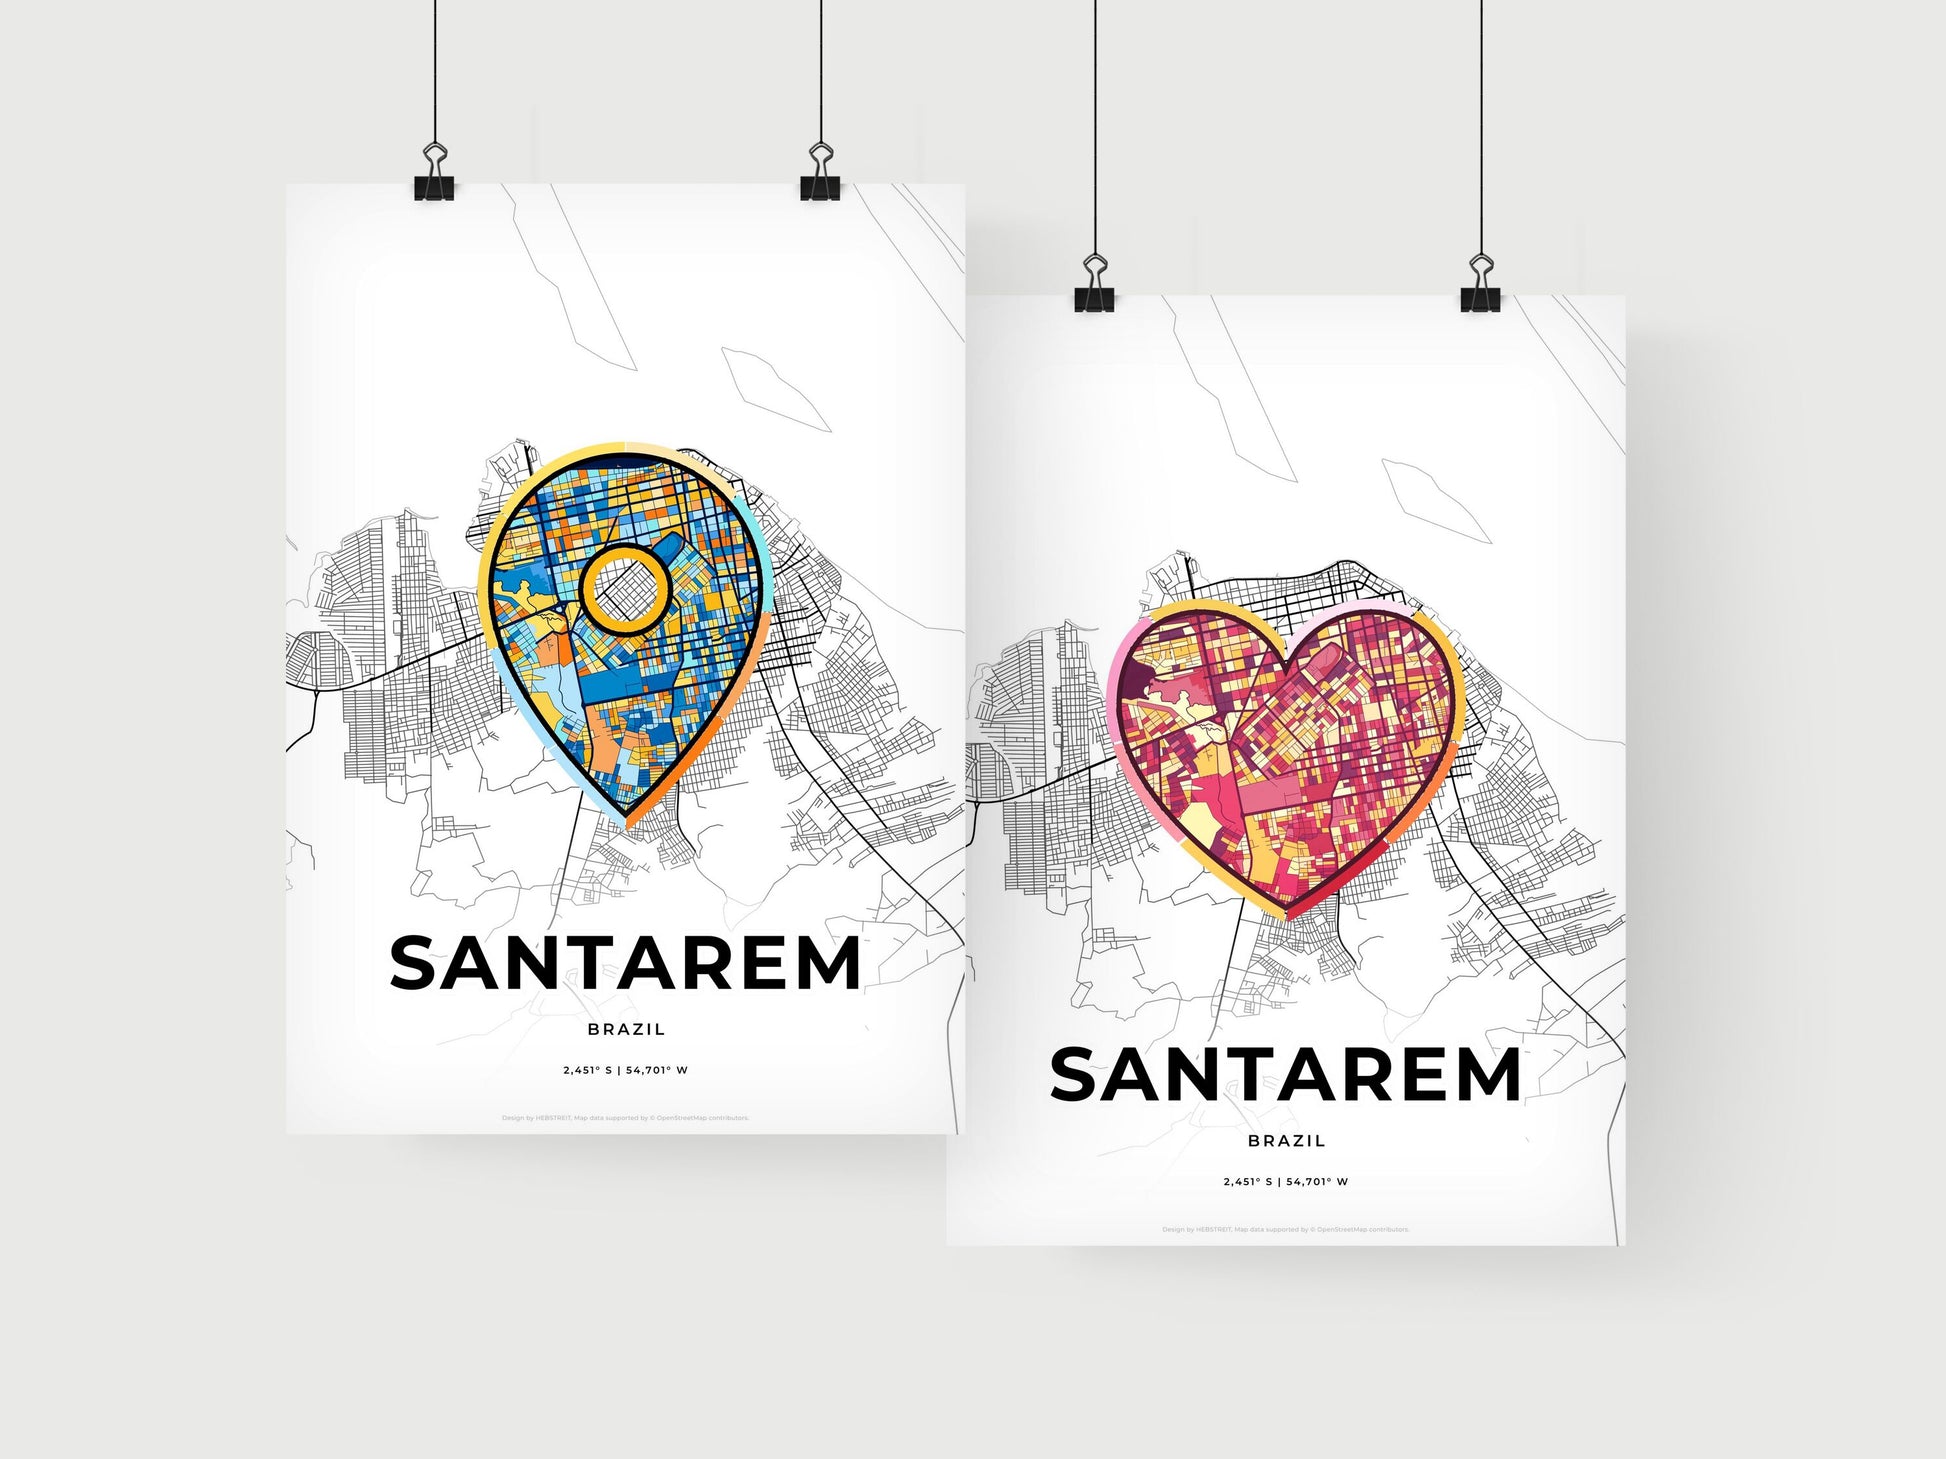 SANTAREM BRAZIL minimal art map with a colorful icon.